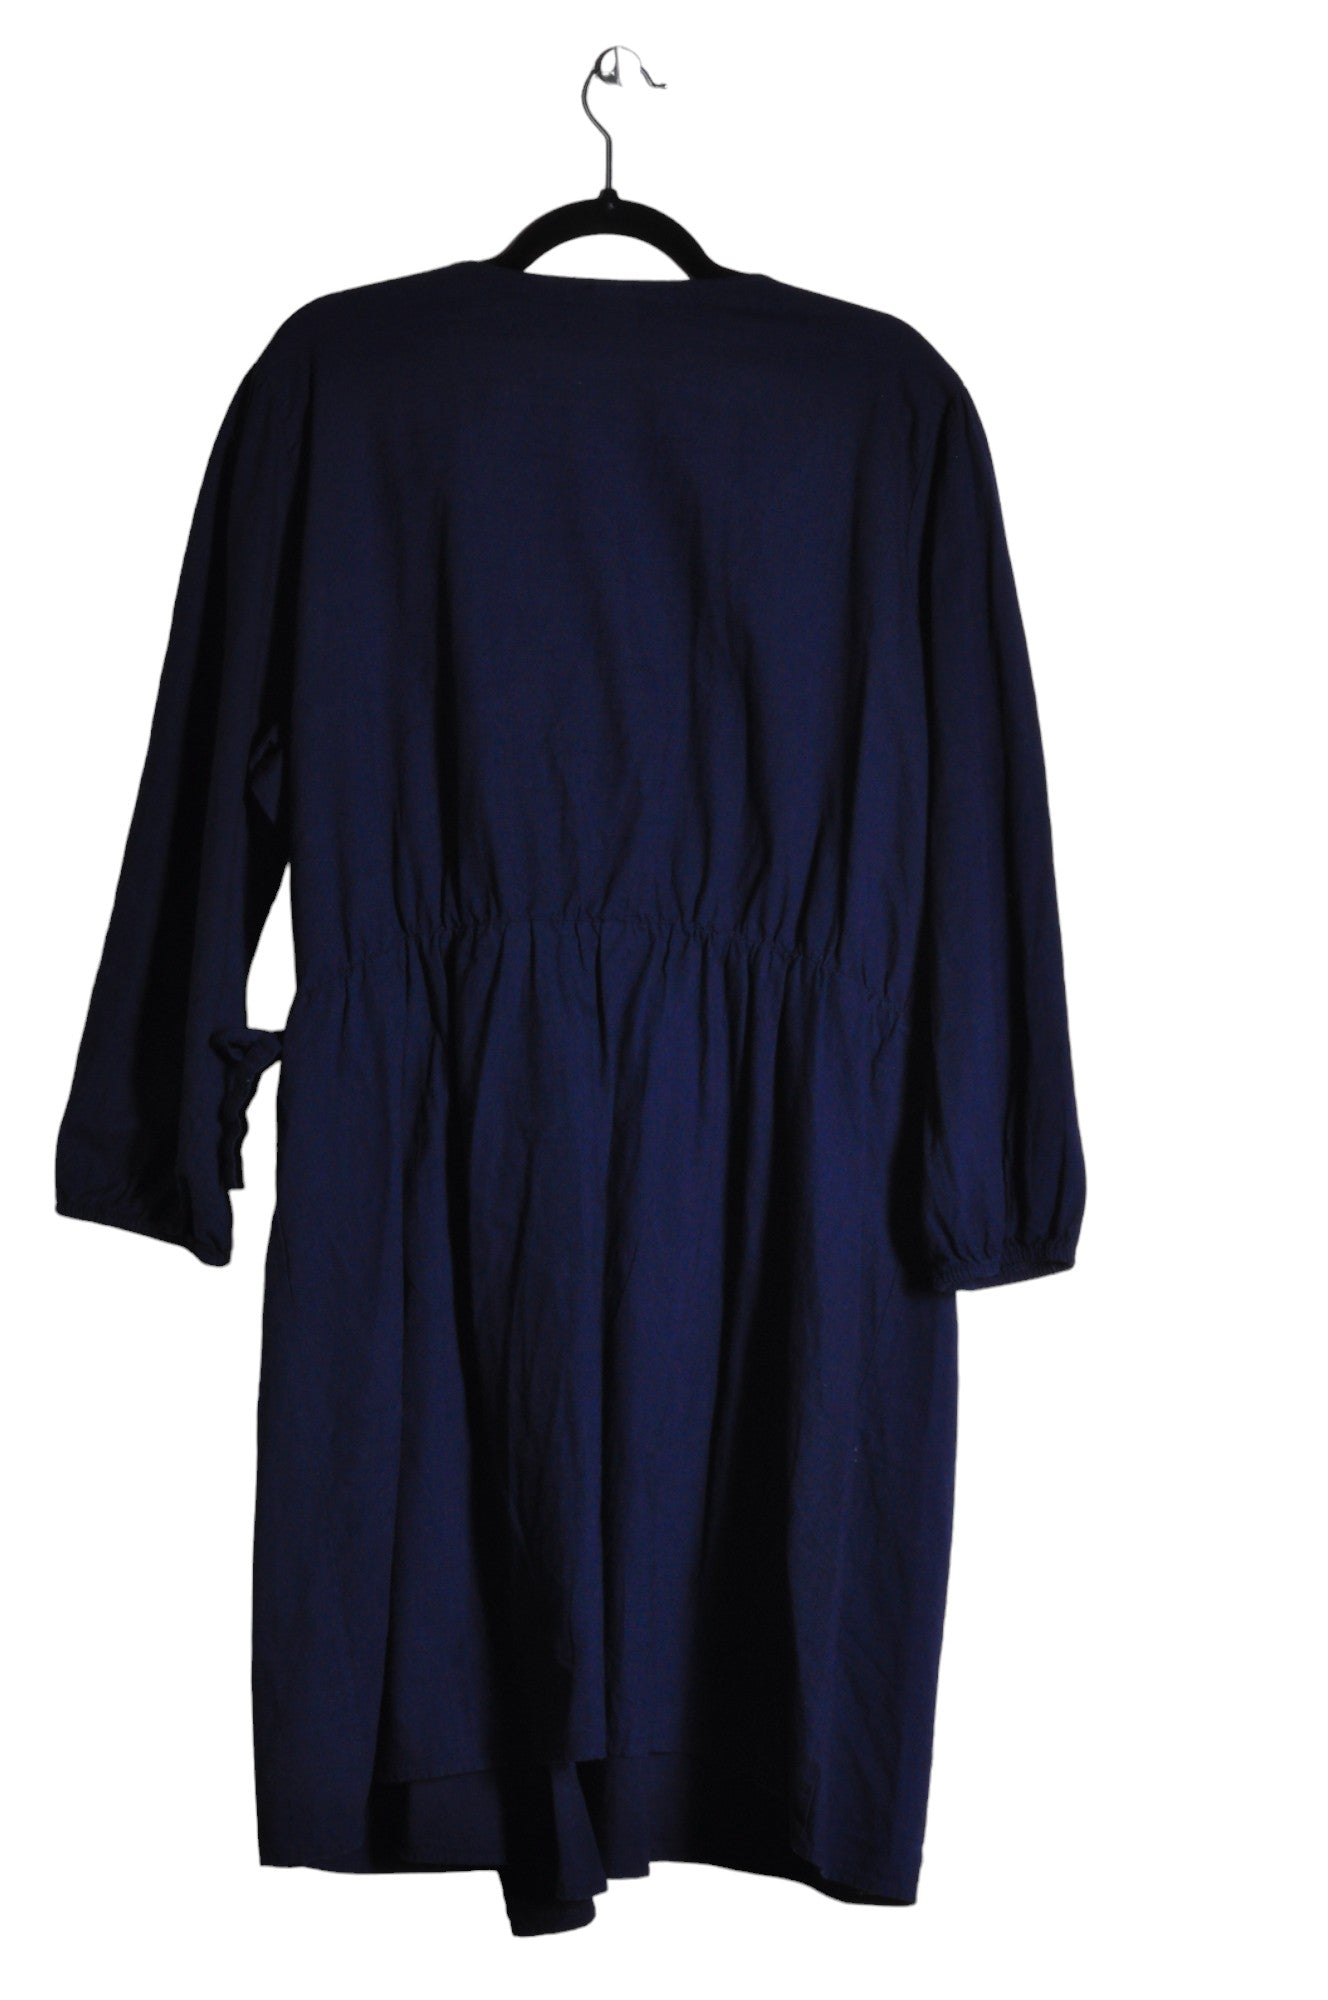 OLD NAVY Women Drop Waist Dresses Regular fit in Blue - Size XXL | 18.4 $ KOOP